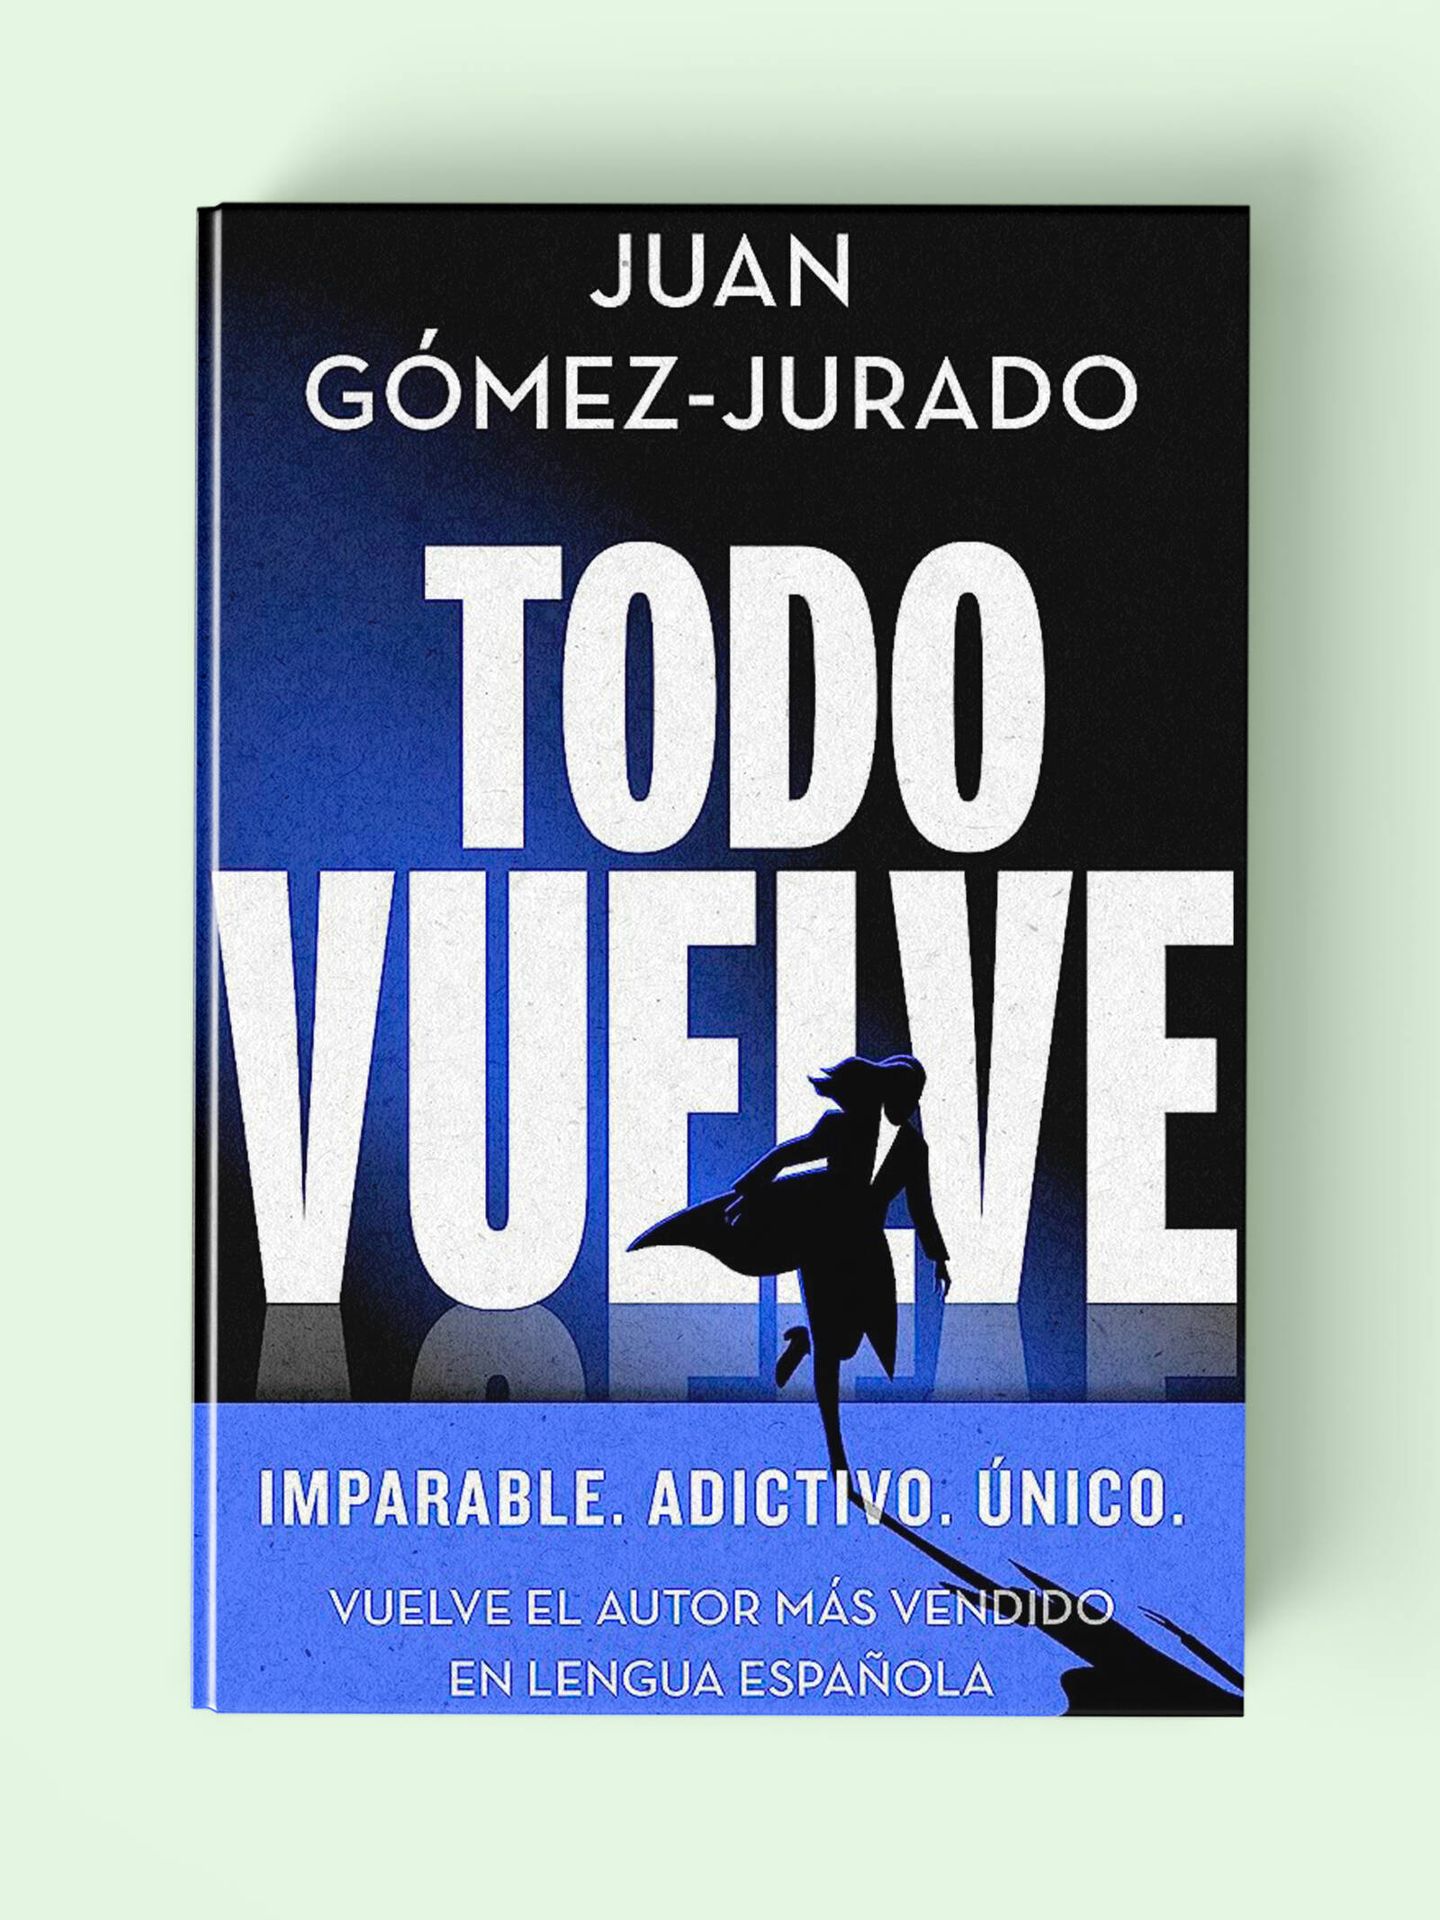 'Todo vuelve', de Juan Gómez-Jurado. 